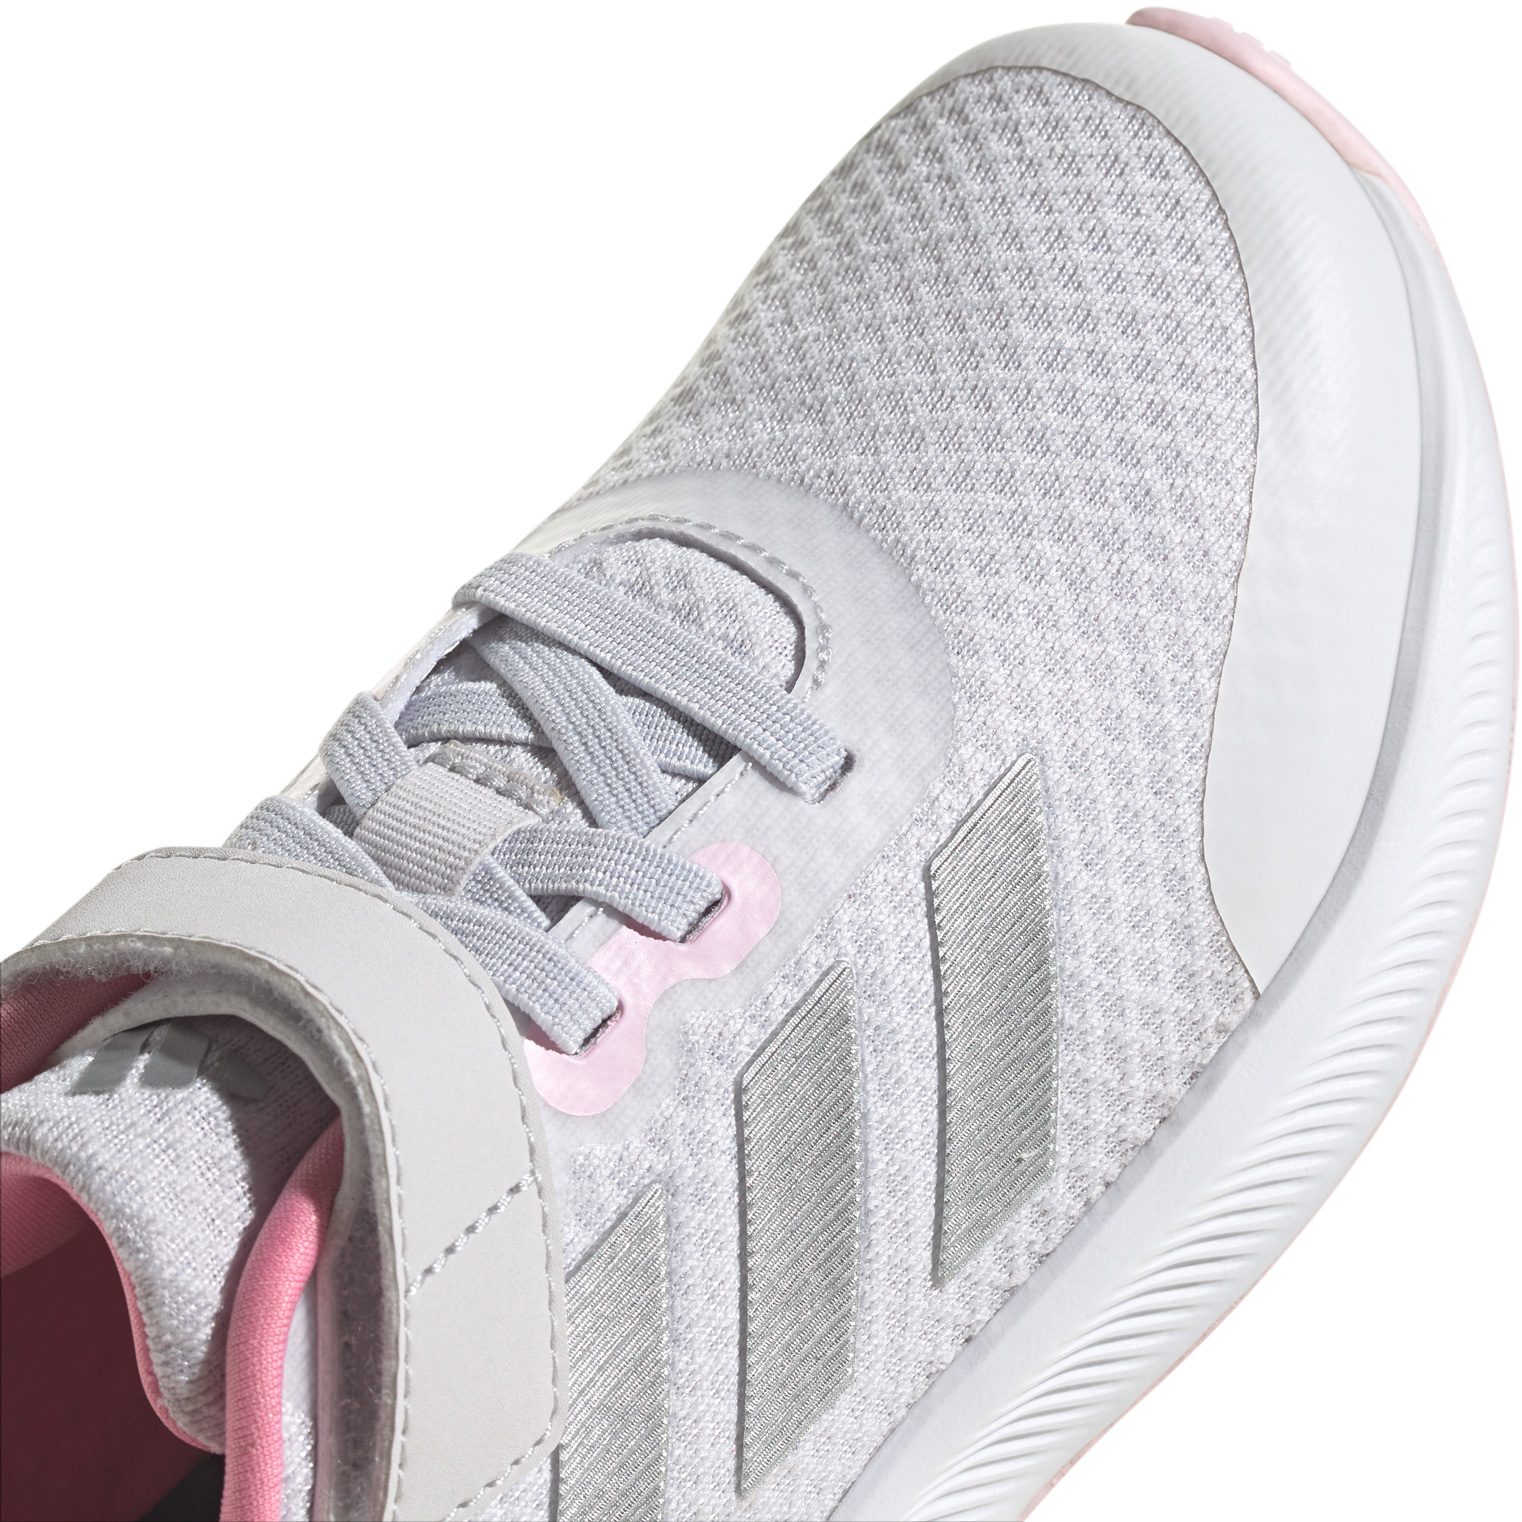 adidas - RunFalcon im Strap Top Shop Laufschuhe dash Lace kaufen grey Elastic Bittl Kinder Sport 3.0